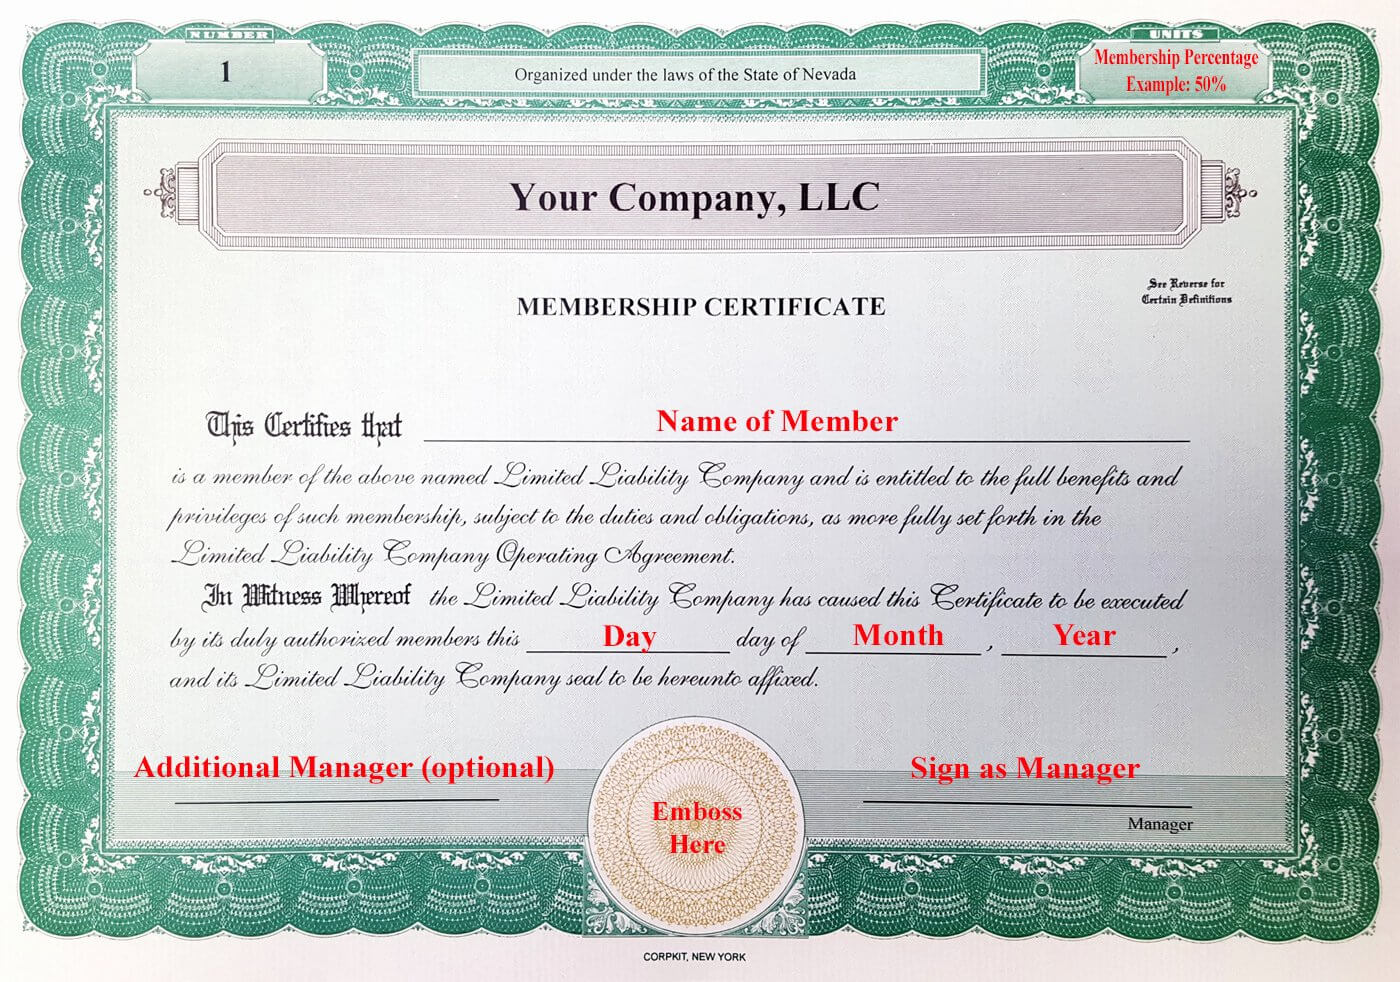 004 Llcship Certificate Template Best Of Laughlin Associates Pertaining To Llc Membership Certificate Template Word